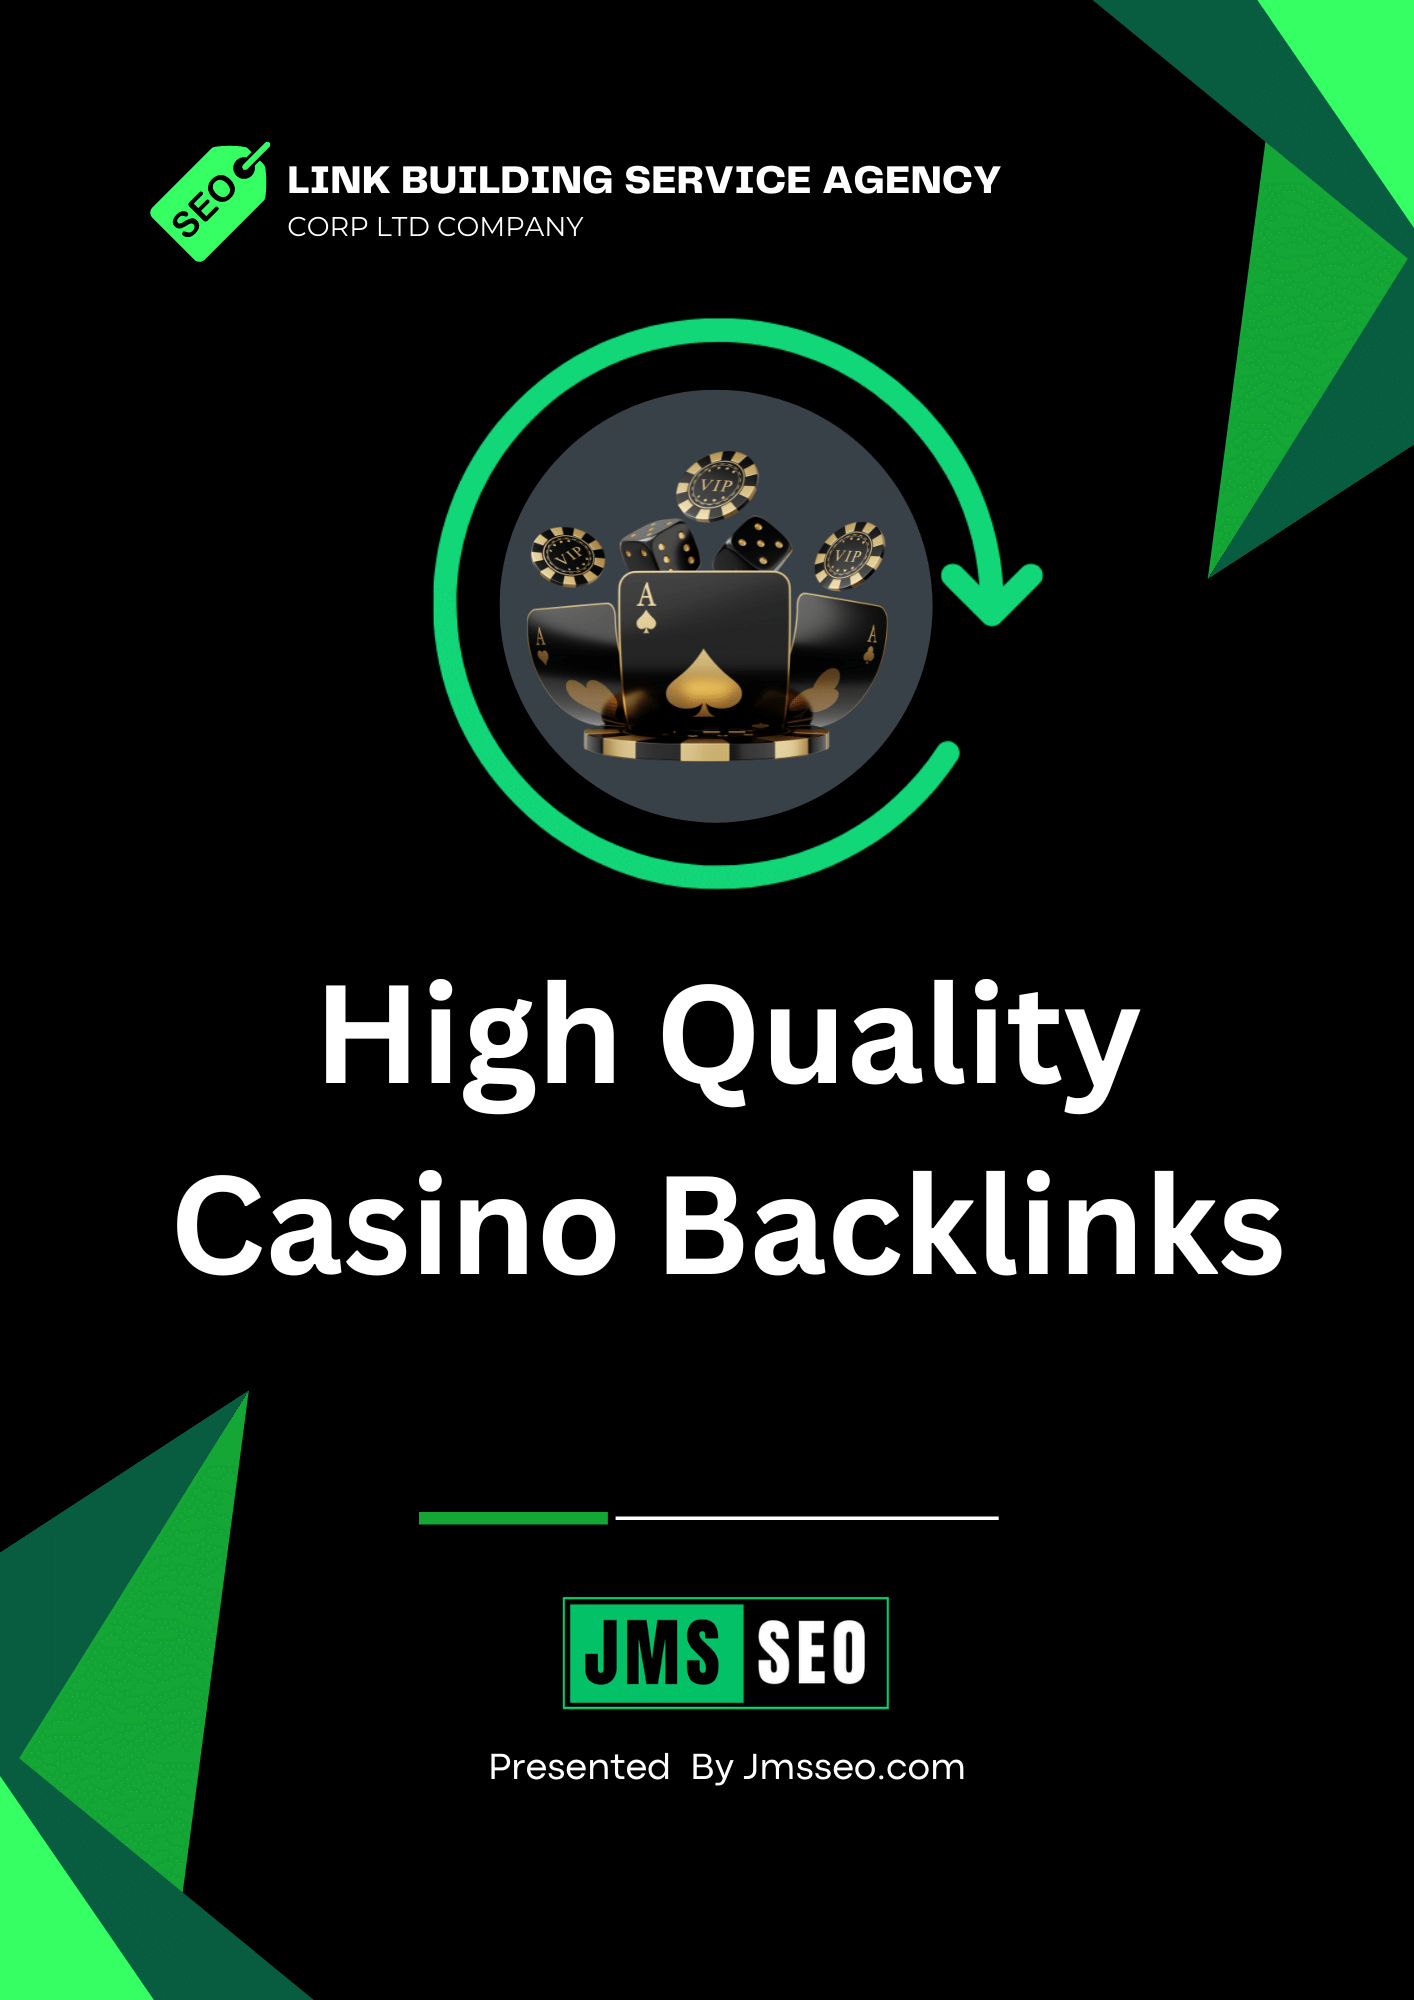 Buy Casino Backlinks